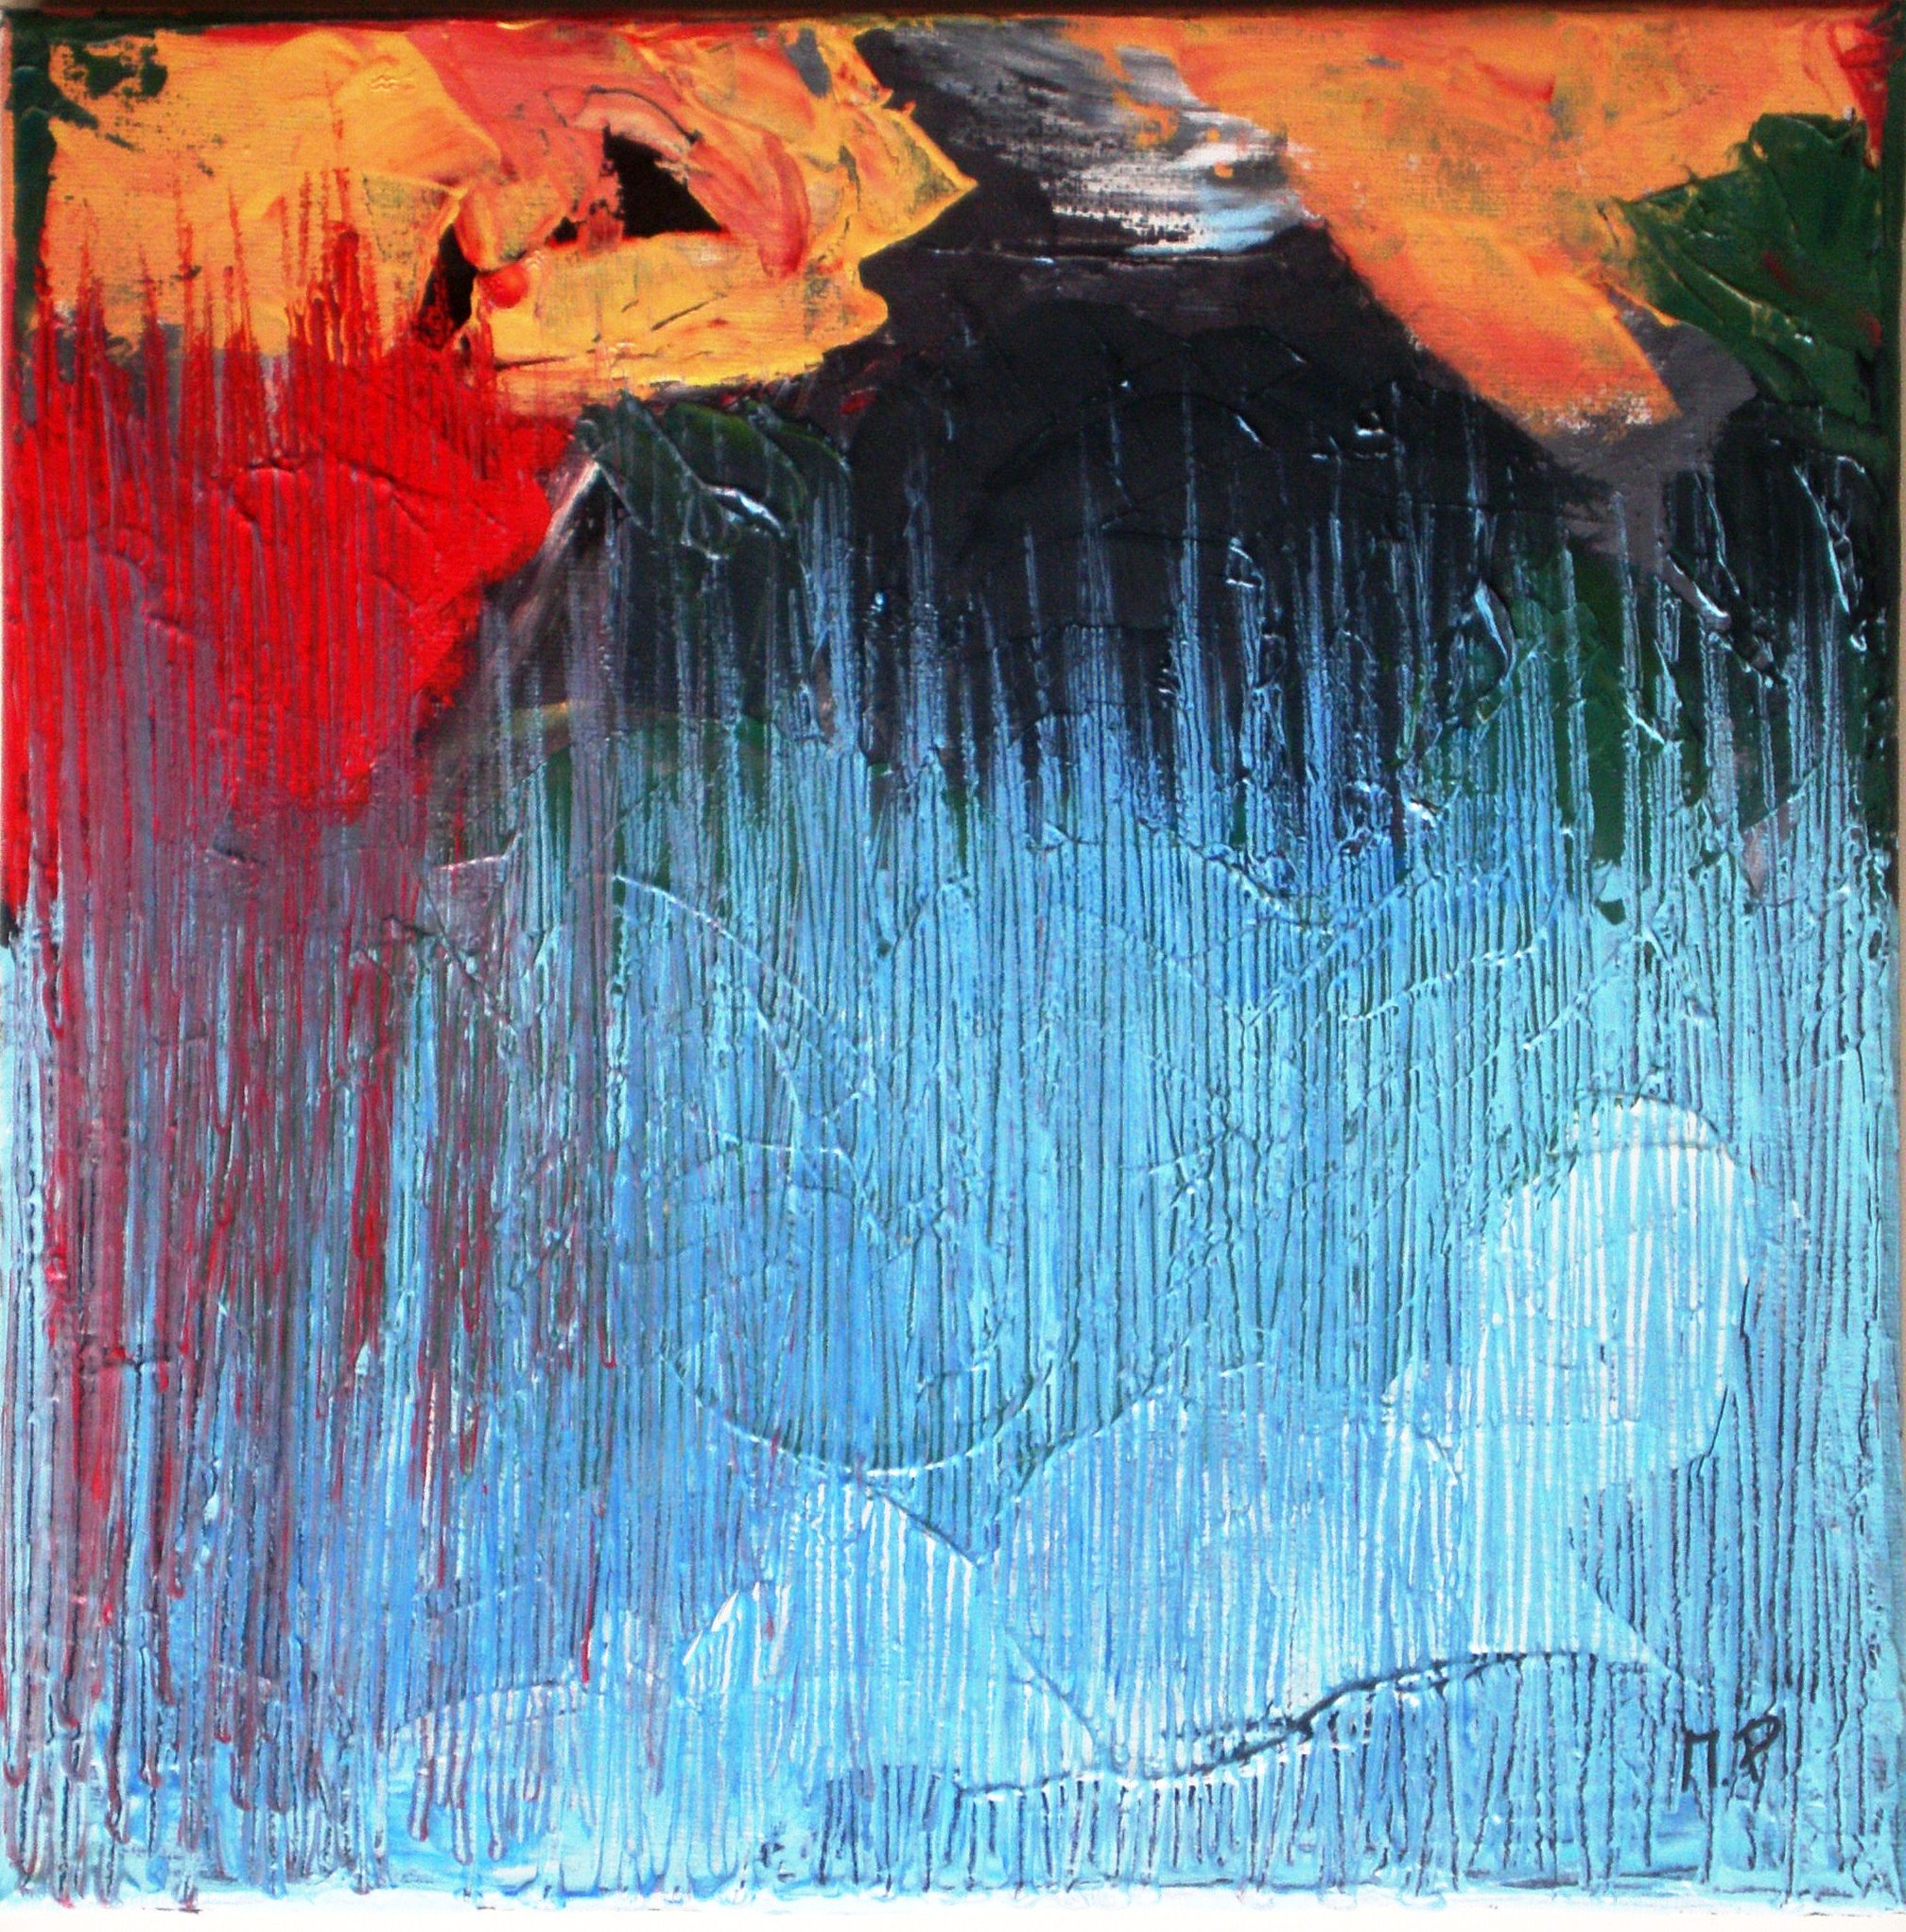 Capriccio informale 3 (Whim informal), 2015 dipinto olio su tela (painting oil on canvas), cm 30x30,Pasquale Mastrogiacomo, Acerno (SA).